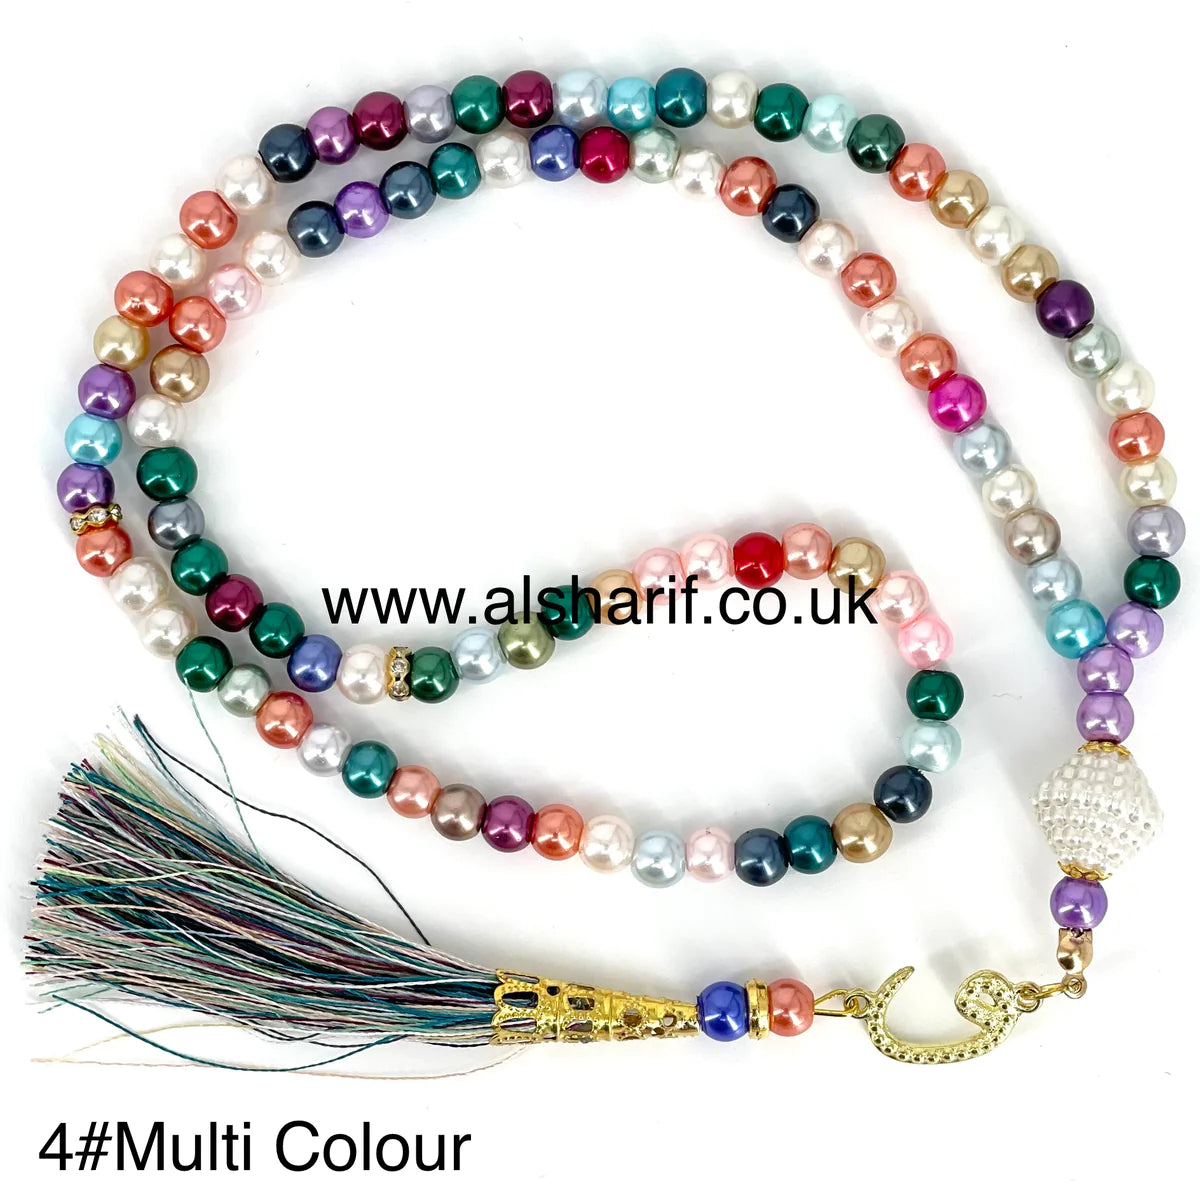 Tasbeeh 99 Beads 4#Multi Colour